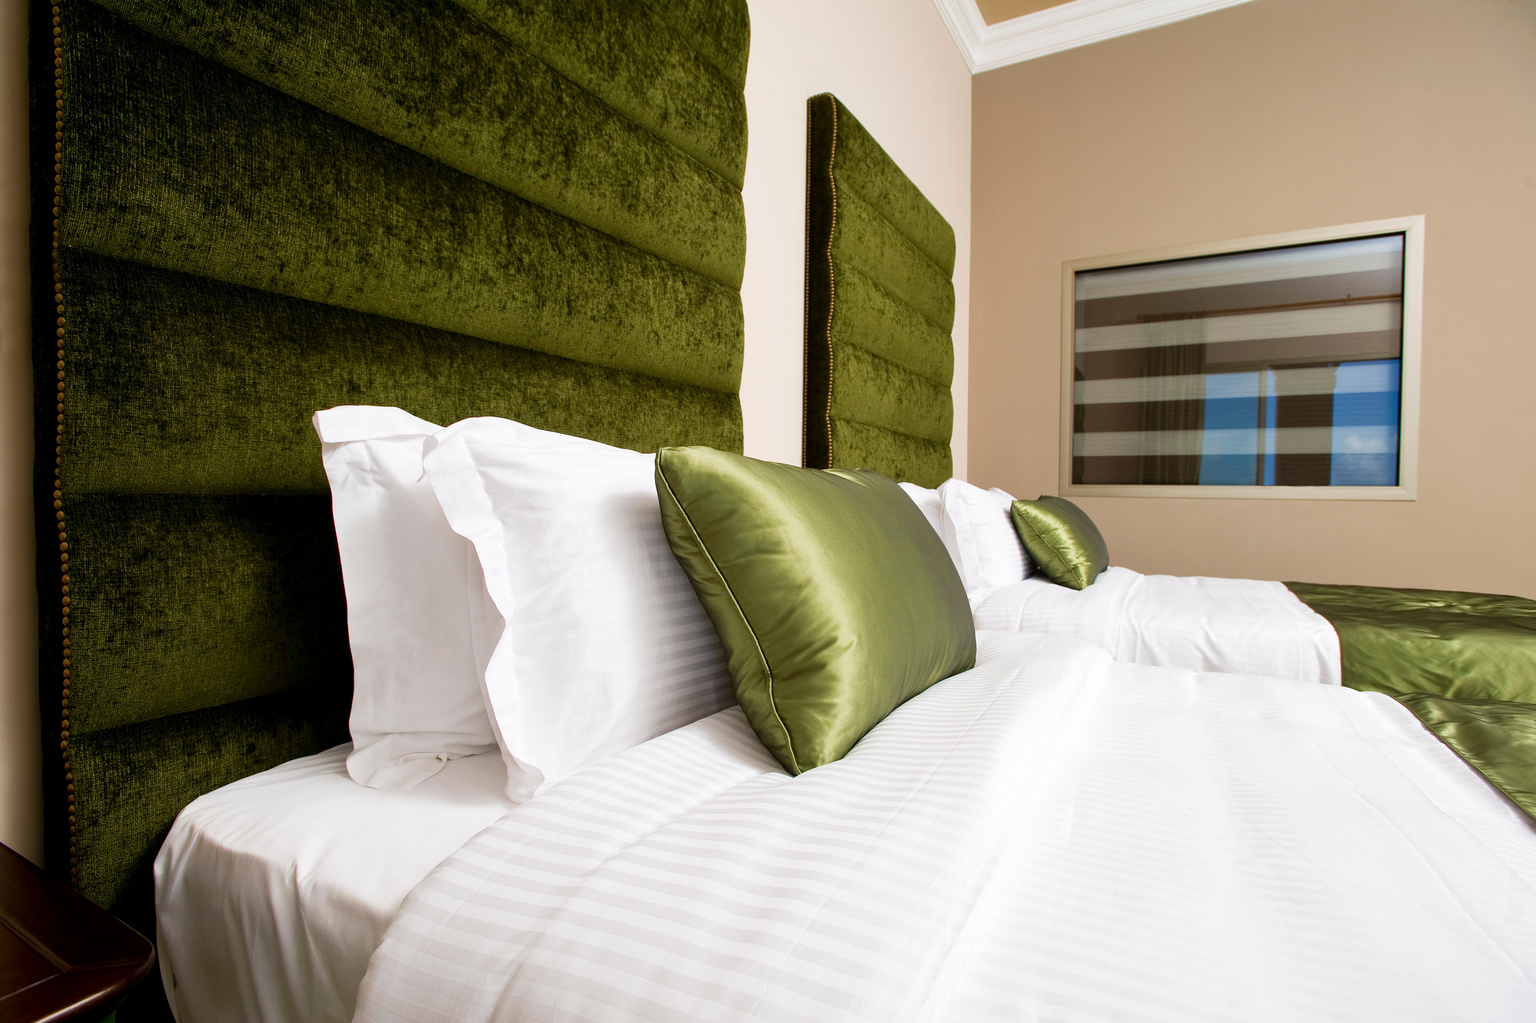 Luxurious hotel bedroom, 5 stars luxury hotel bedroom